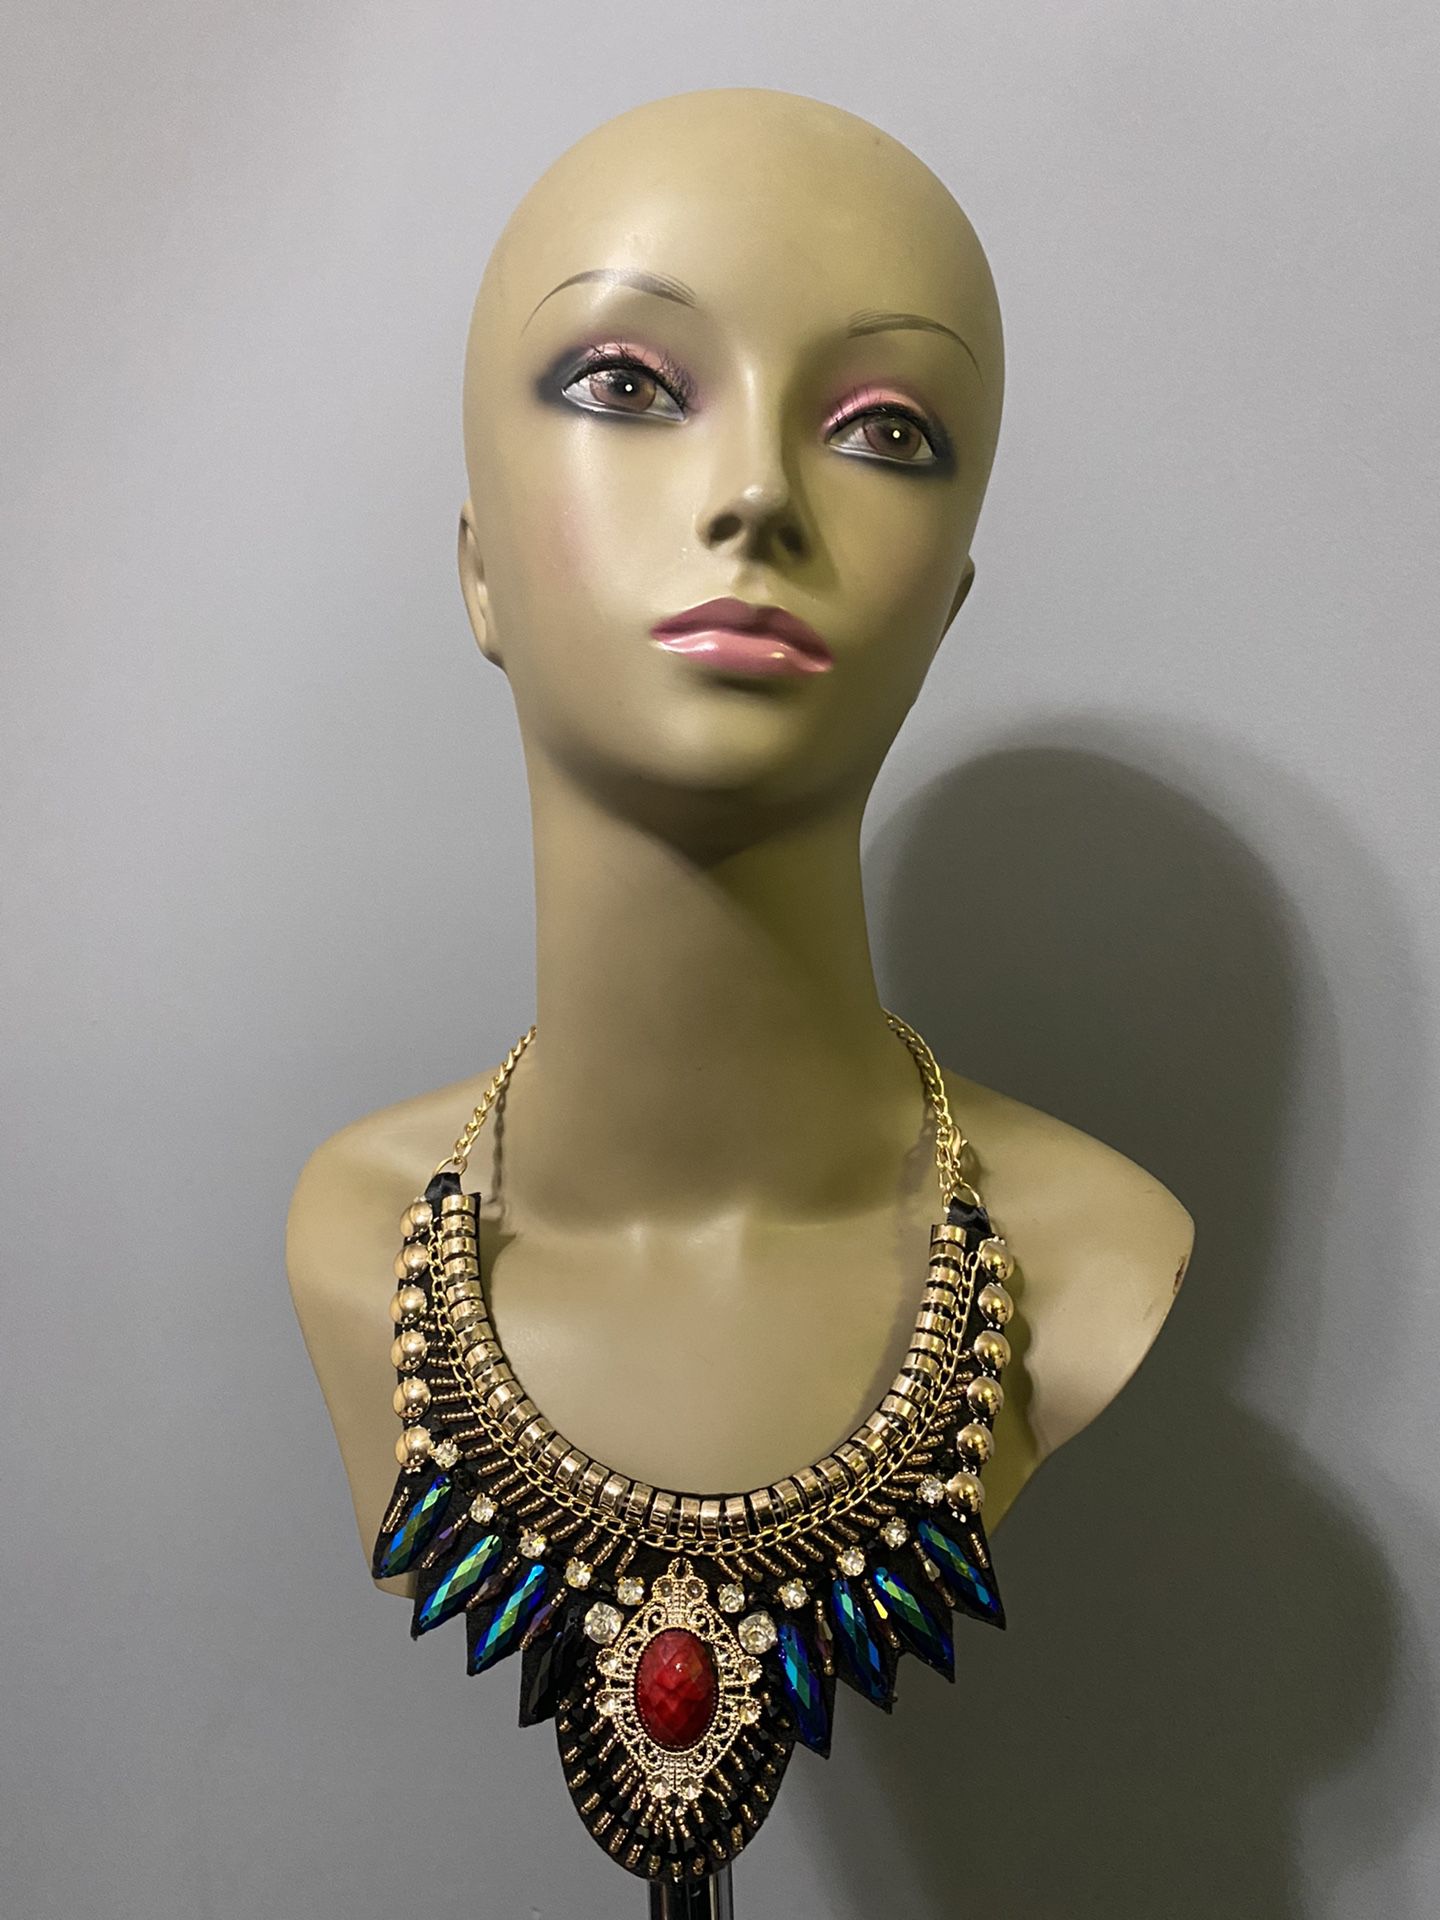 Metallic Blue, Black and Gold Beaded Bib Chain Pendant Necklace 